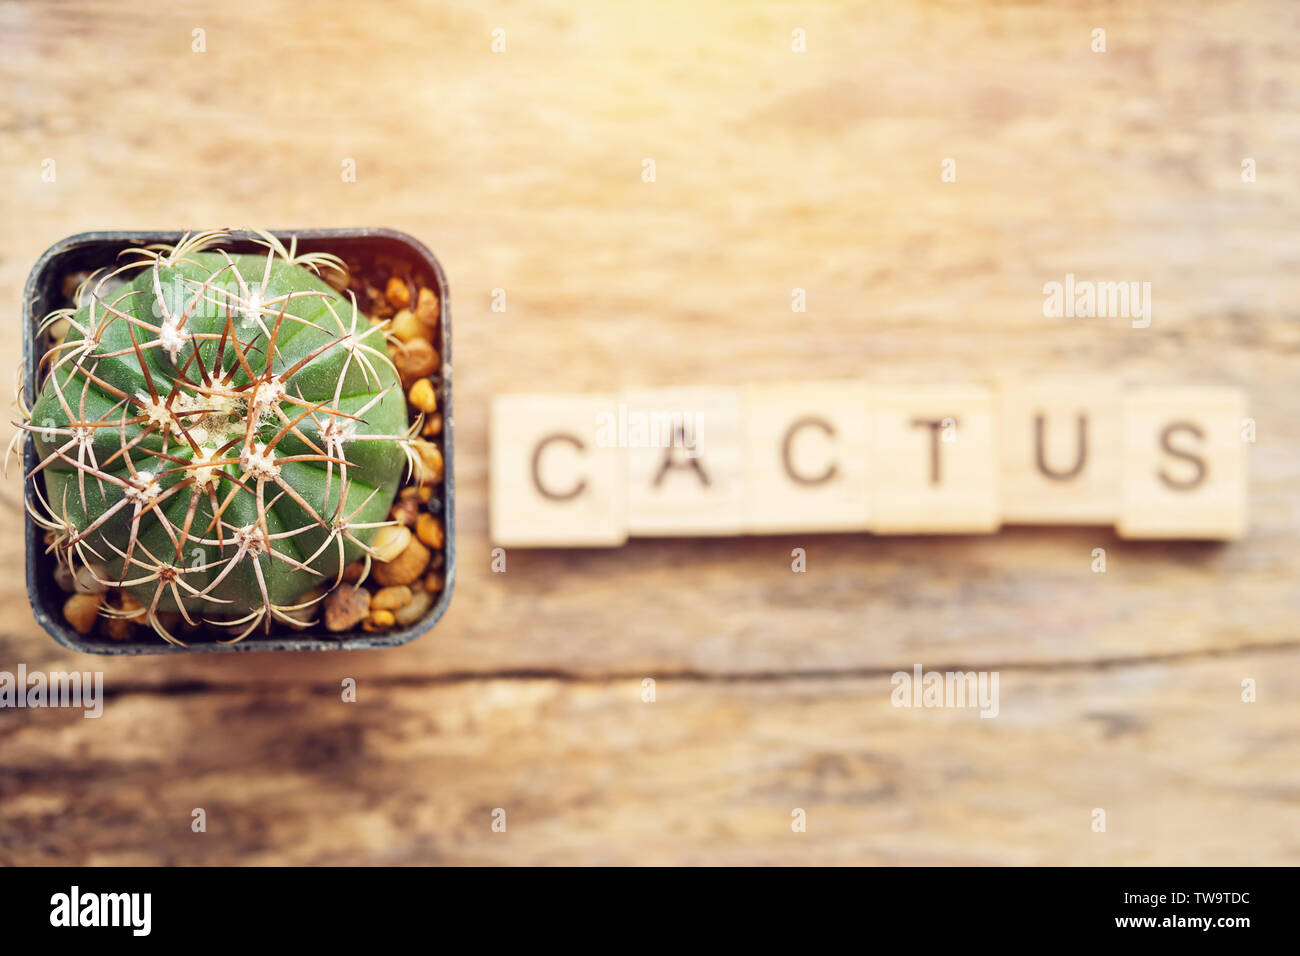 Kaktus Pflanze in einem Topf mit Text Kaktus von holzklotz Stockfoto